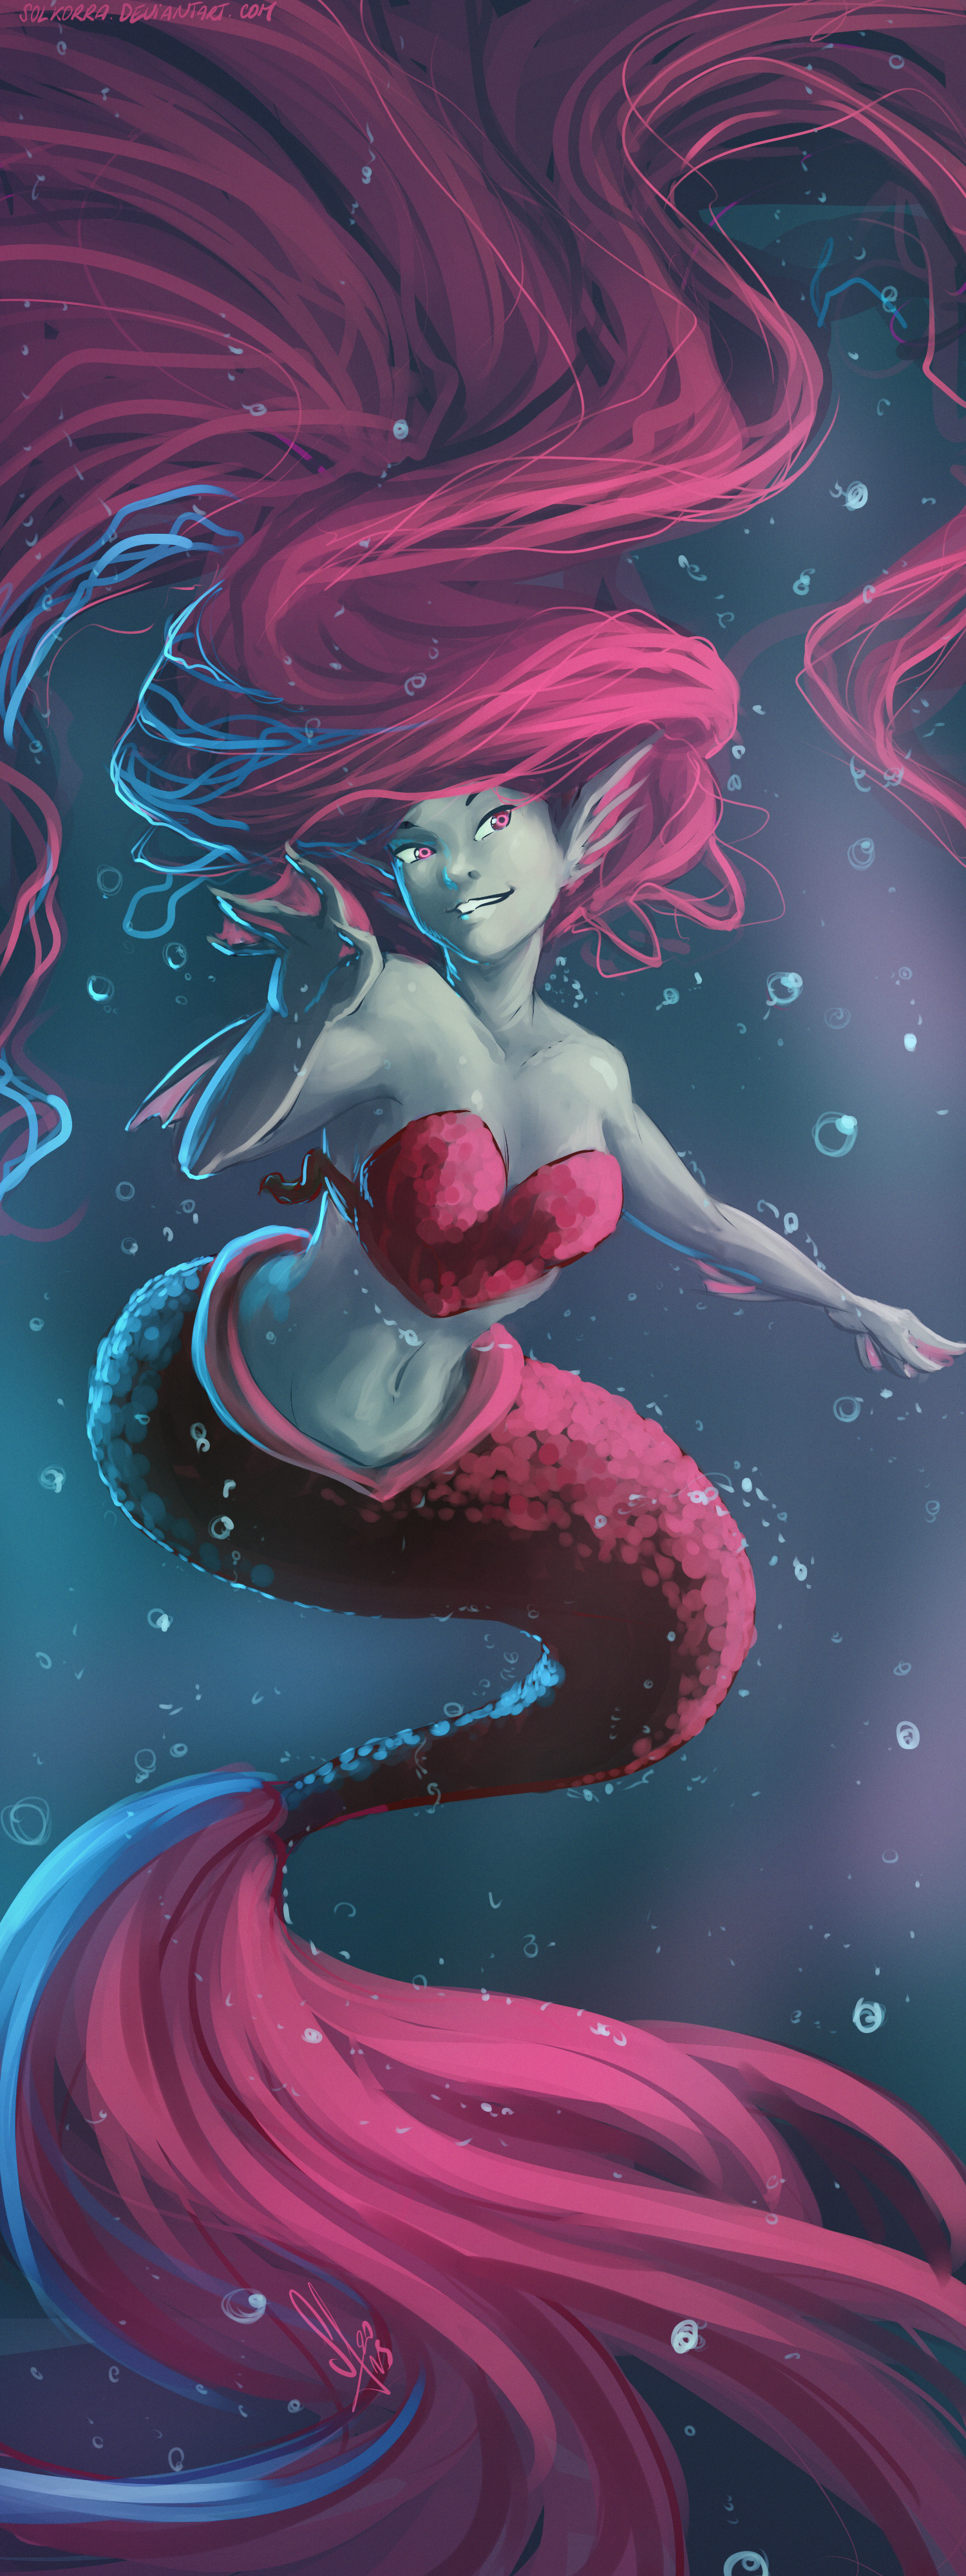 Mermaid Inktober 9th Day